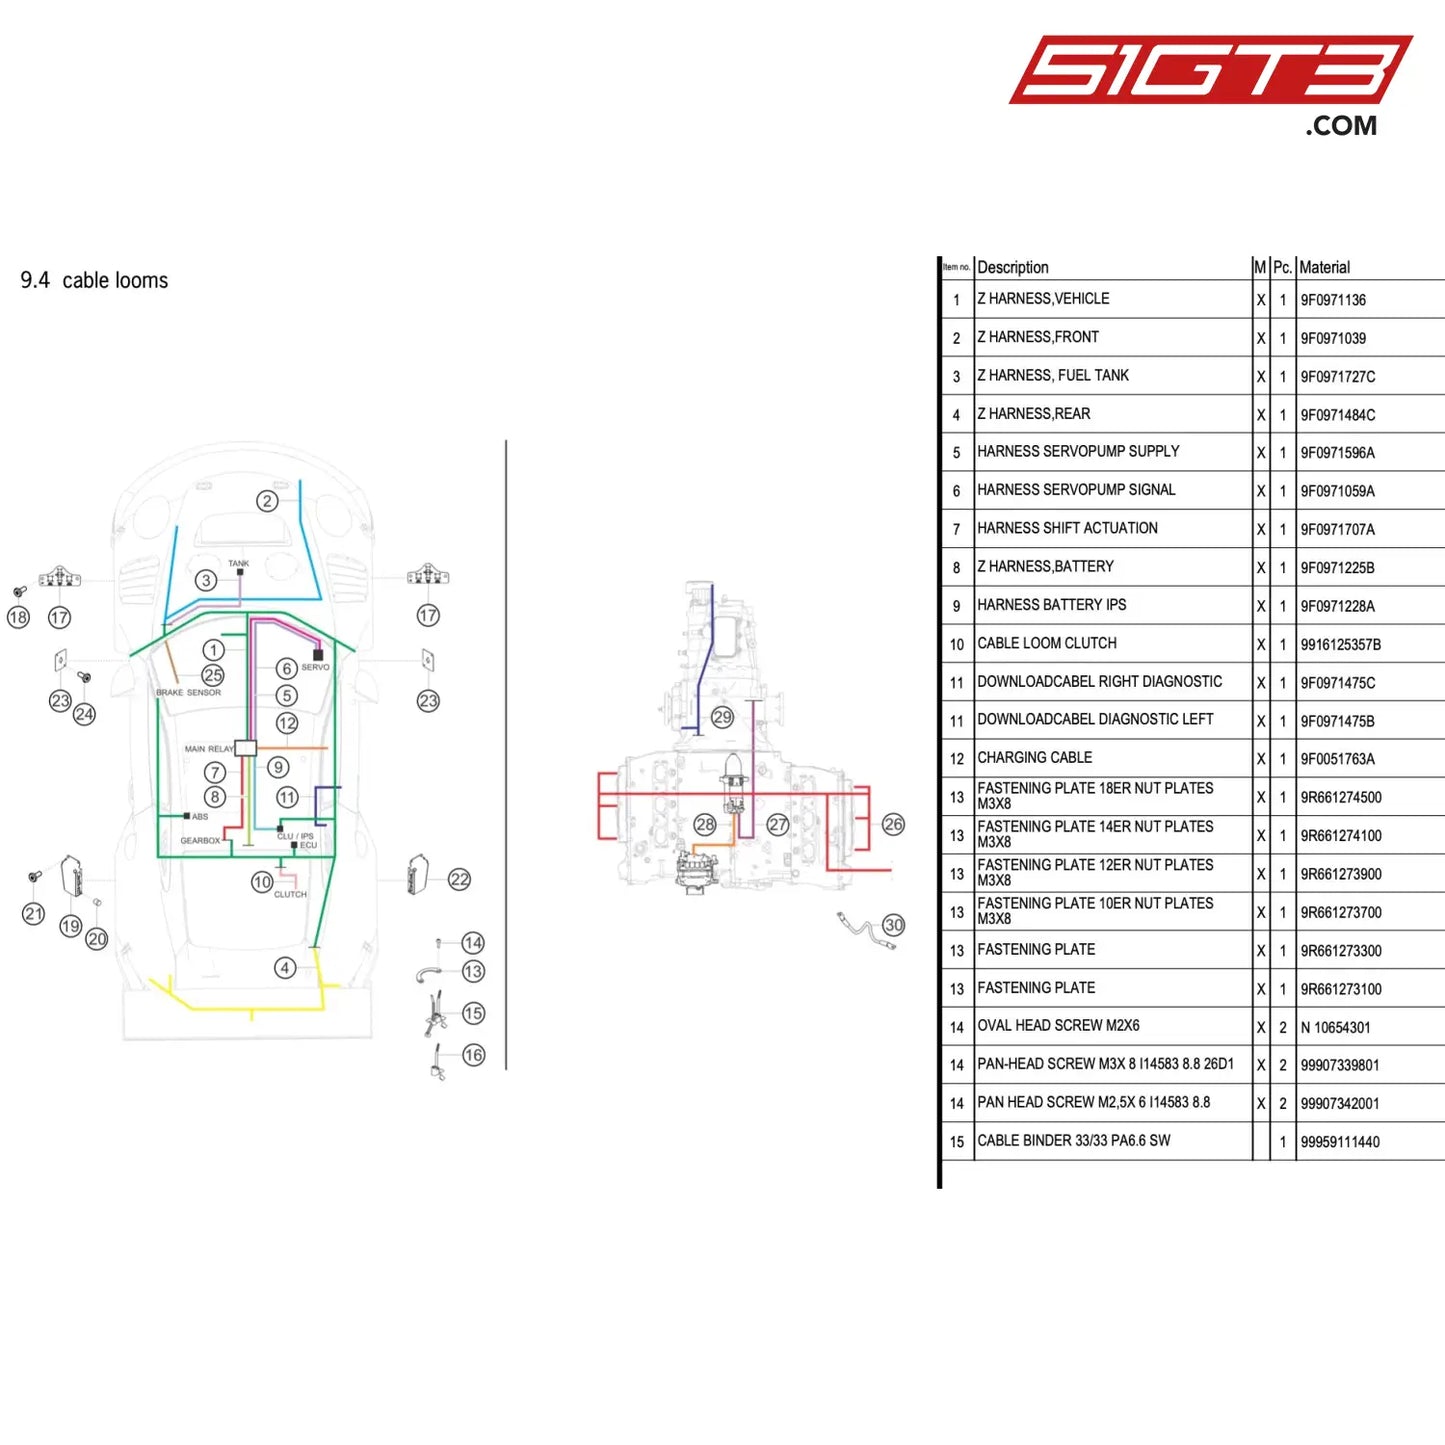 Fastening Plate 6Er Nut Plates M5X8 - 9R661273300 [Porsche 911 Gt3 R Type 991 (Gen 2)] Cable Looms